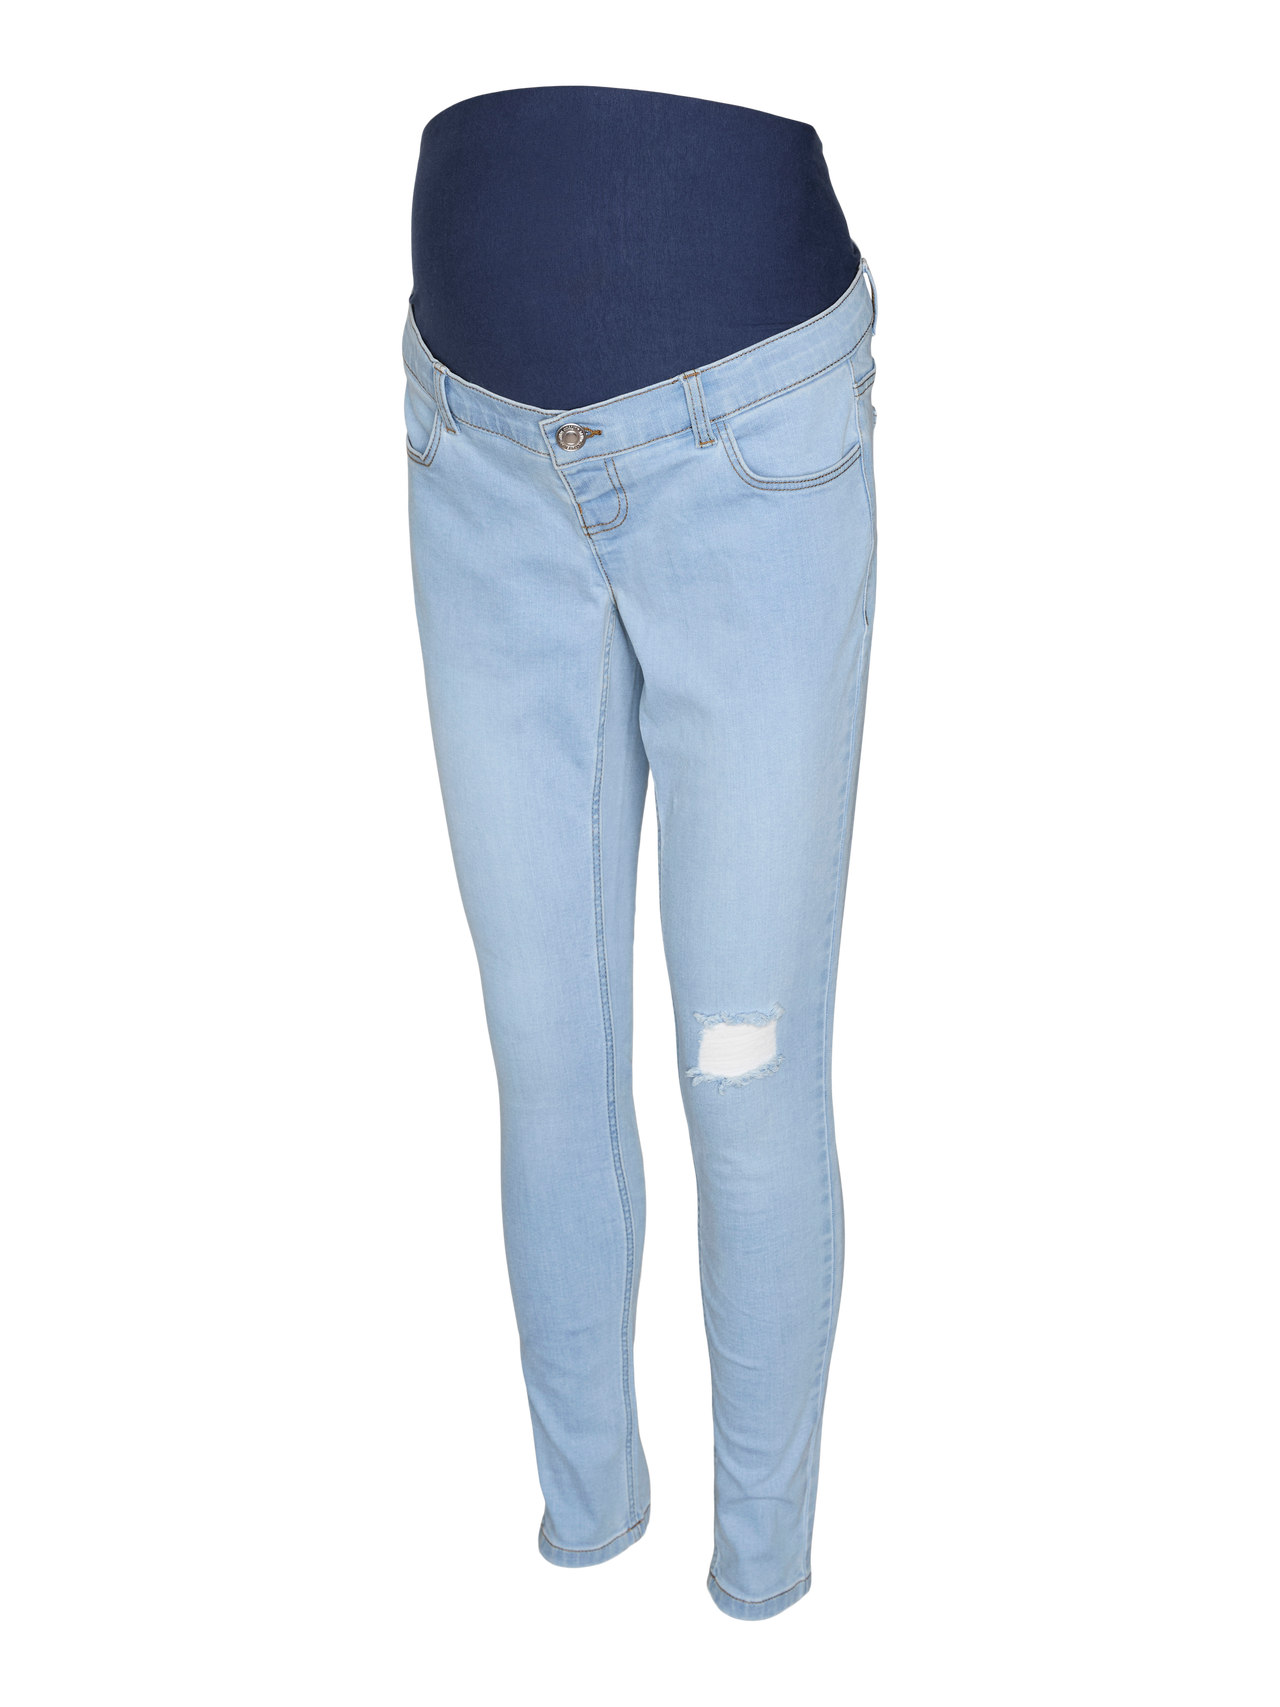 MAMA.LICIOUS Krój skinny Jeans -Light Blue Denim - 20021257